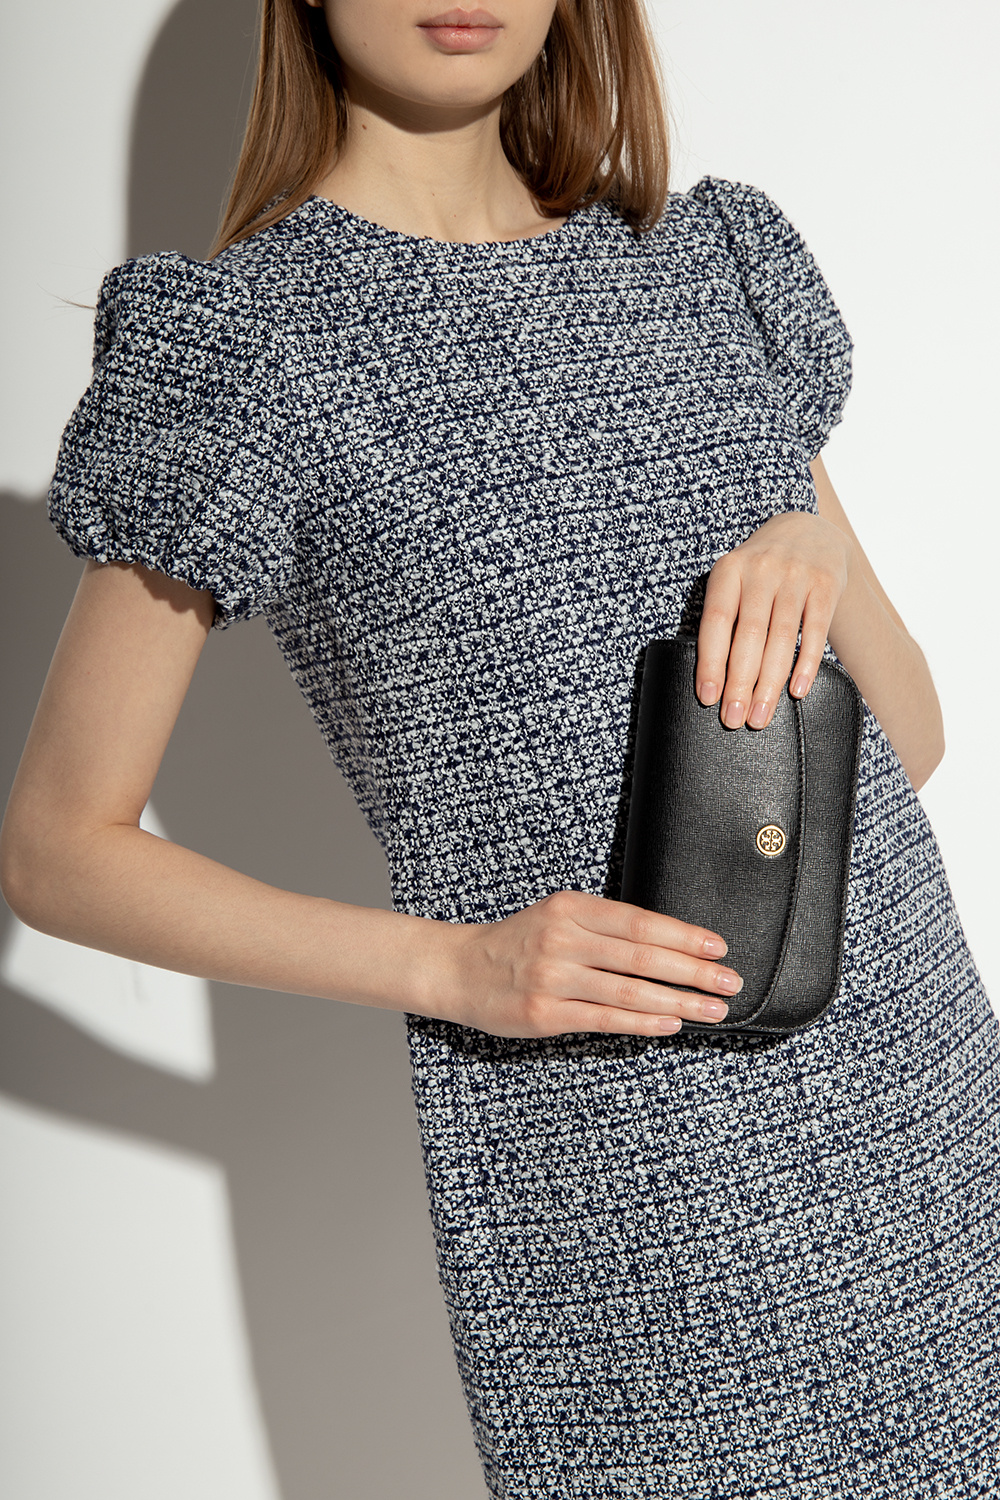 Robinson Chain Wallet: Women's Designer Mini Bags